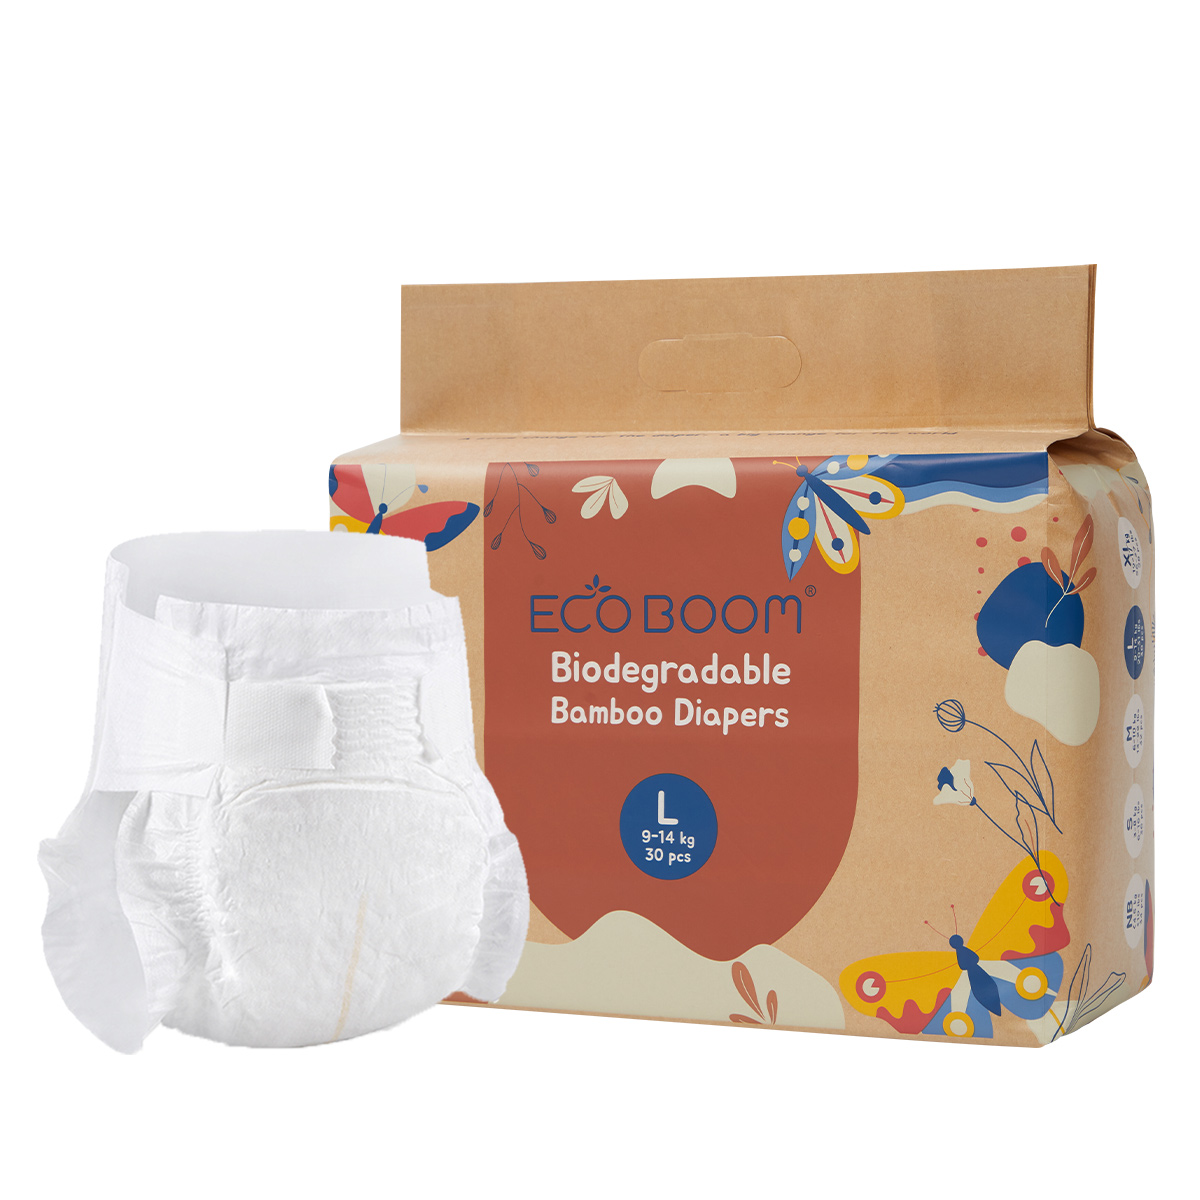 ECO BOOM eco friendly diaper distribution-1